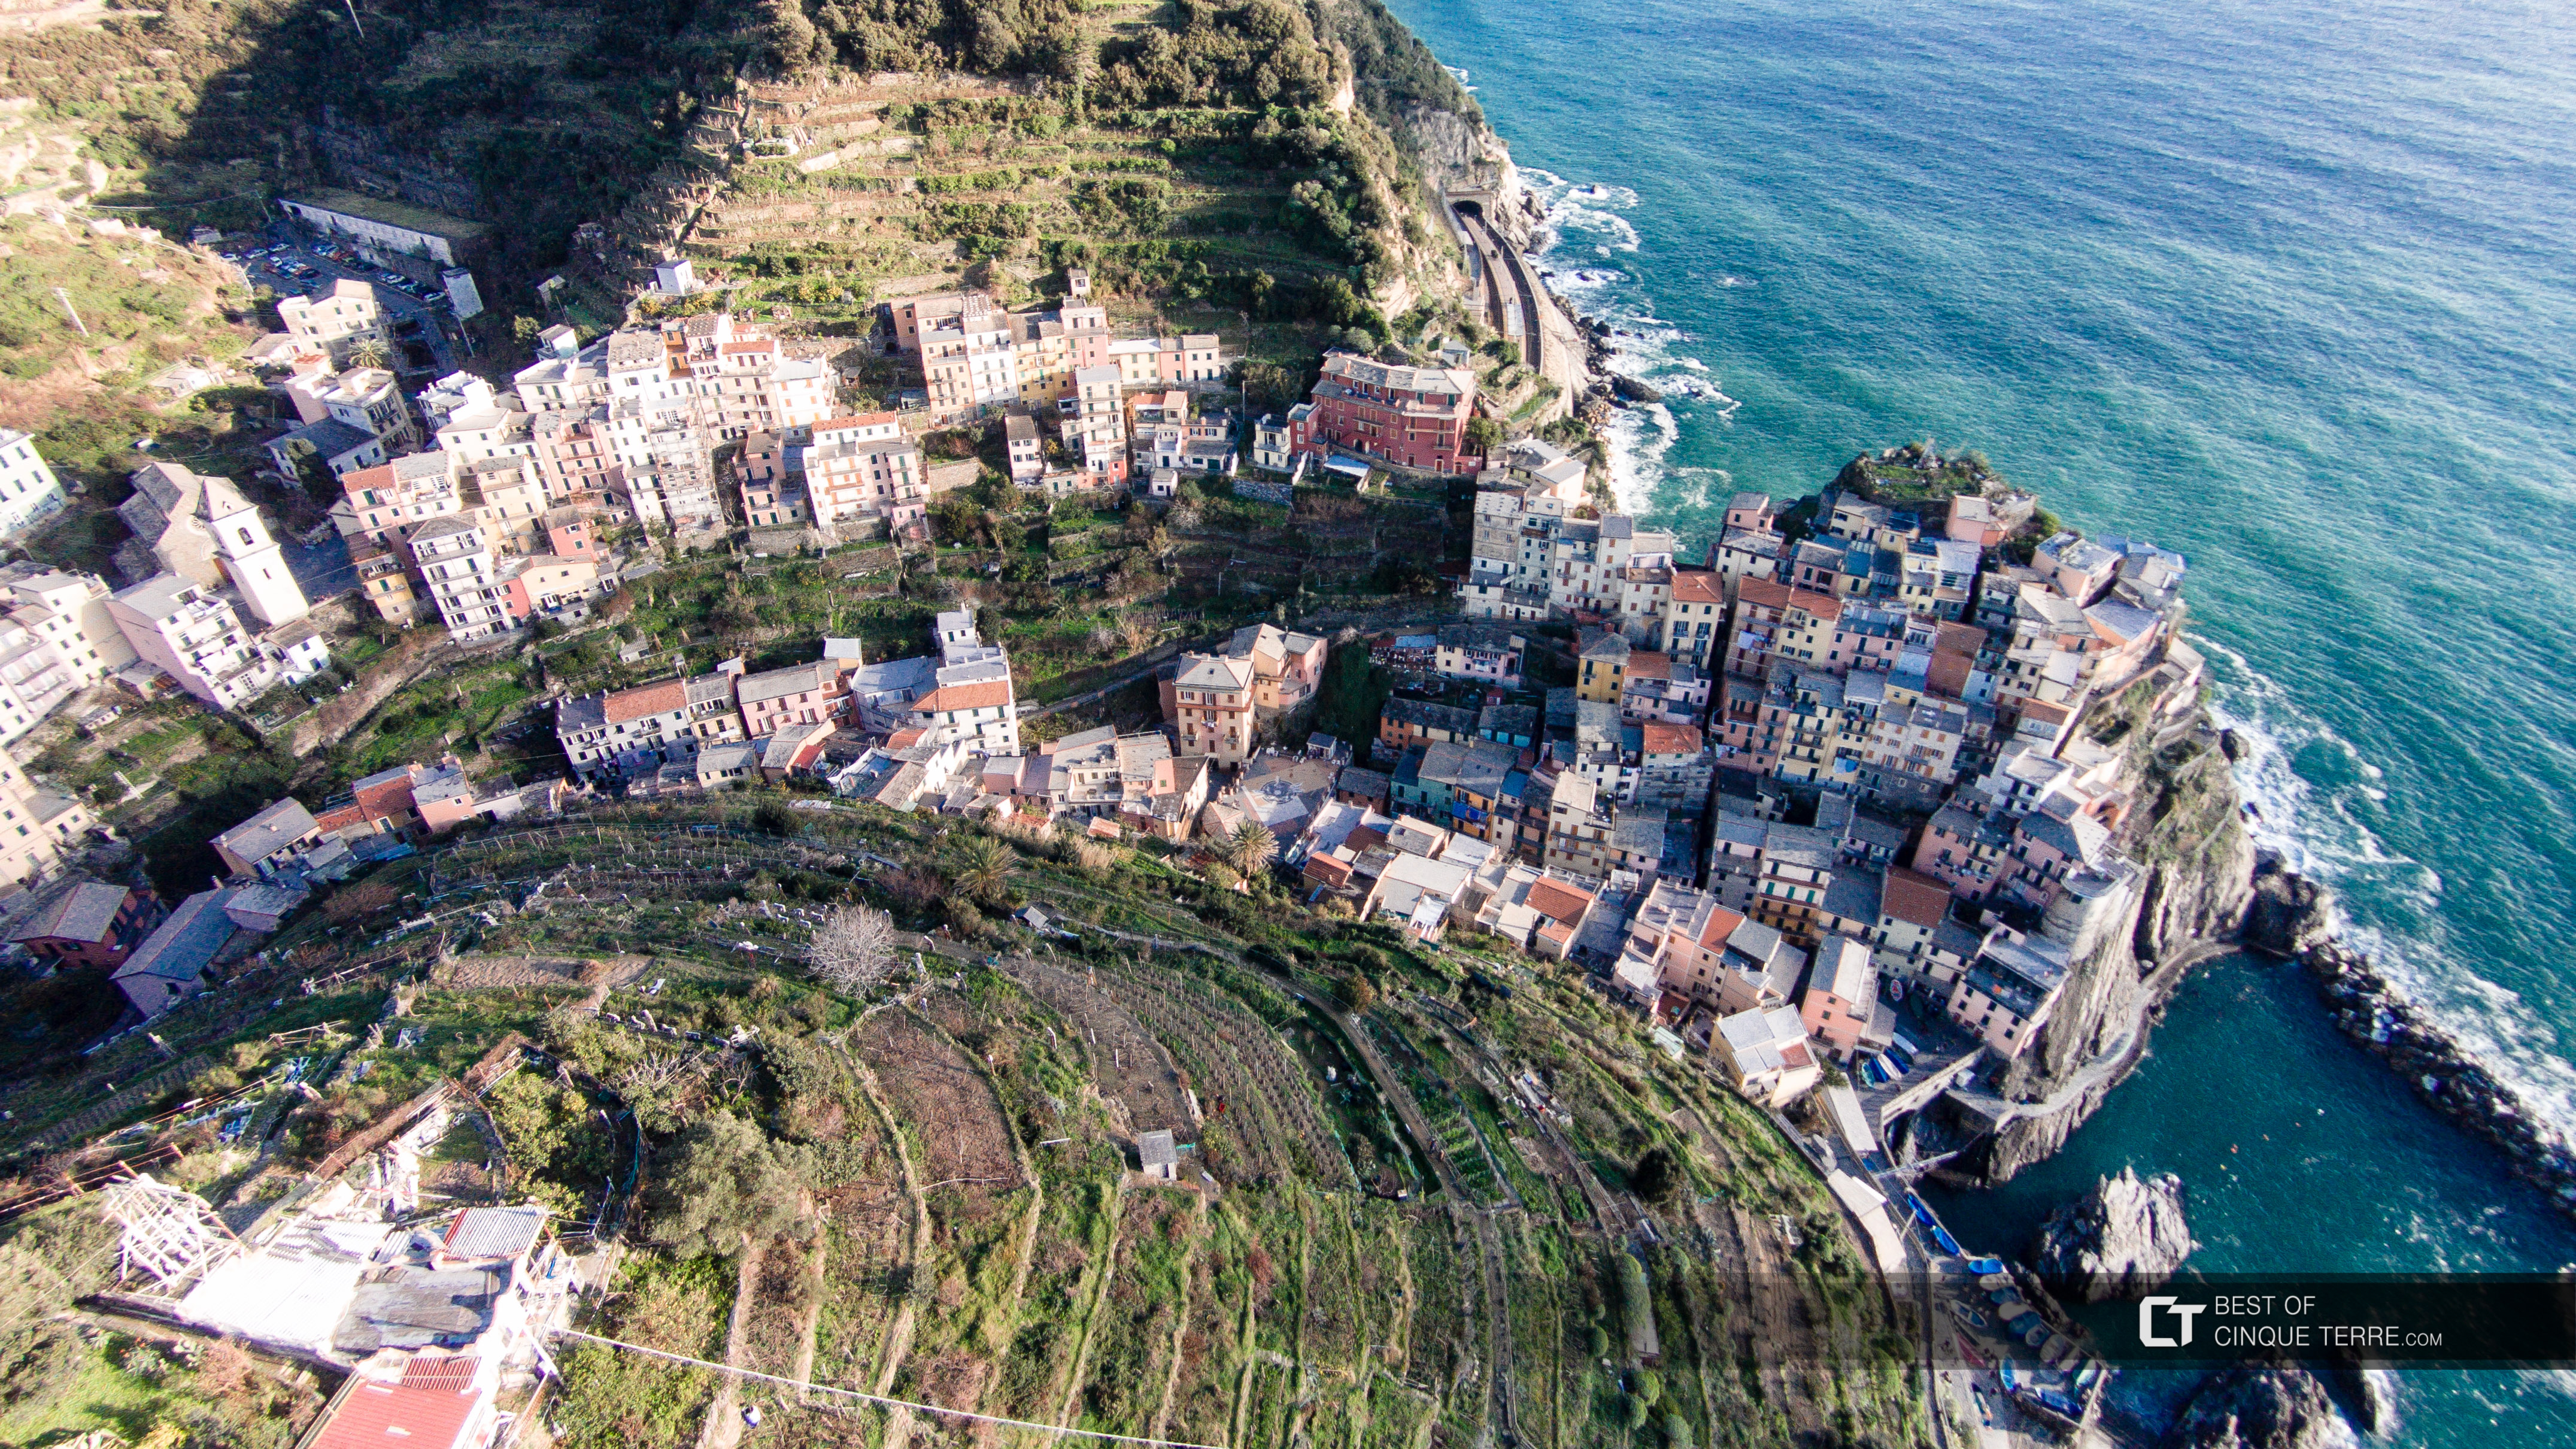 Vista aérea da vila, Manarola, Cinque Terre, Itália